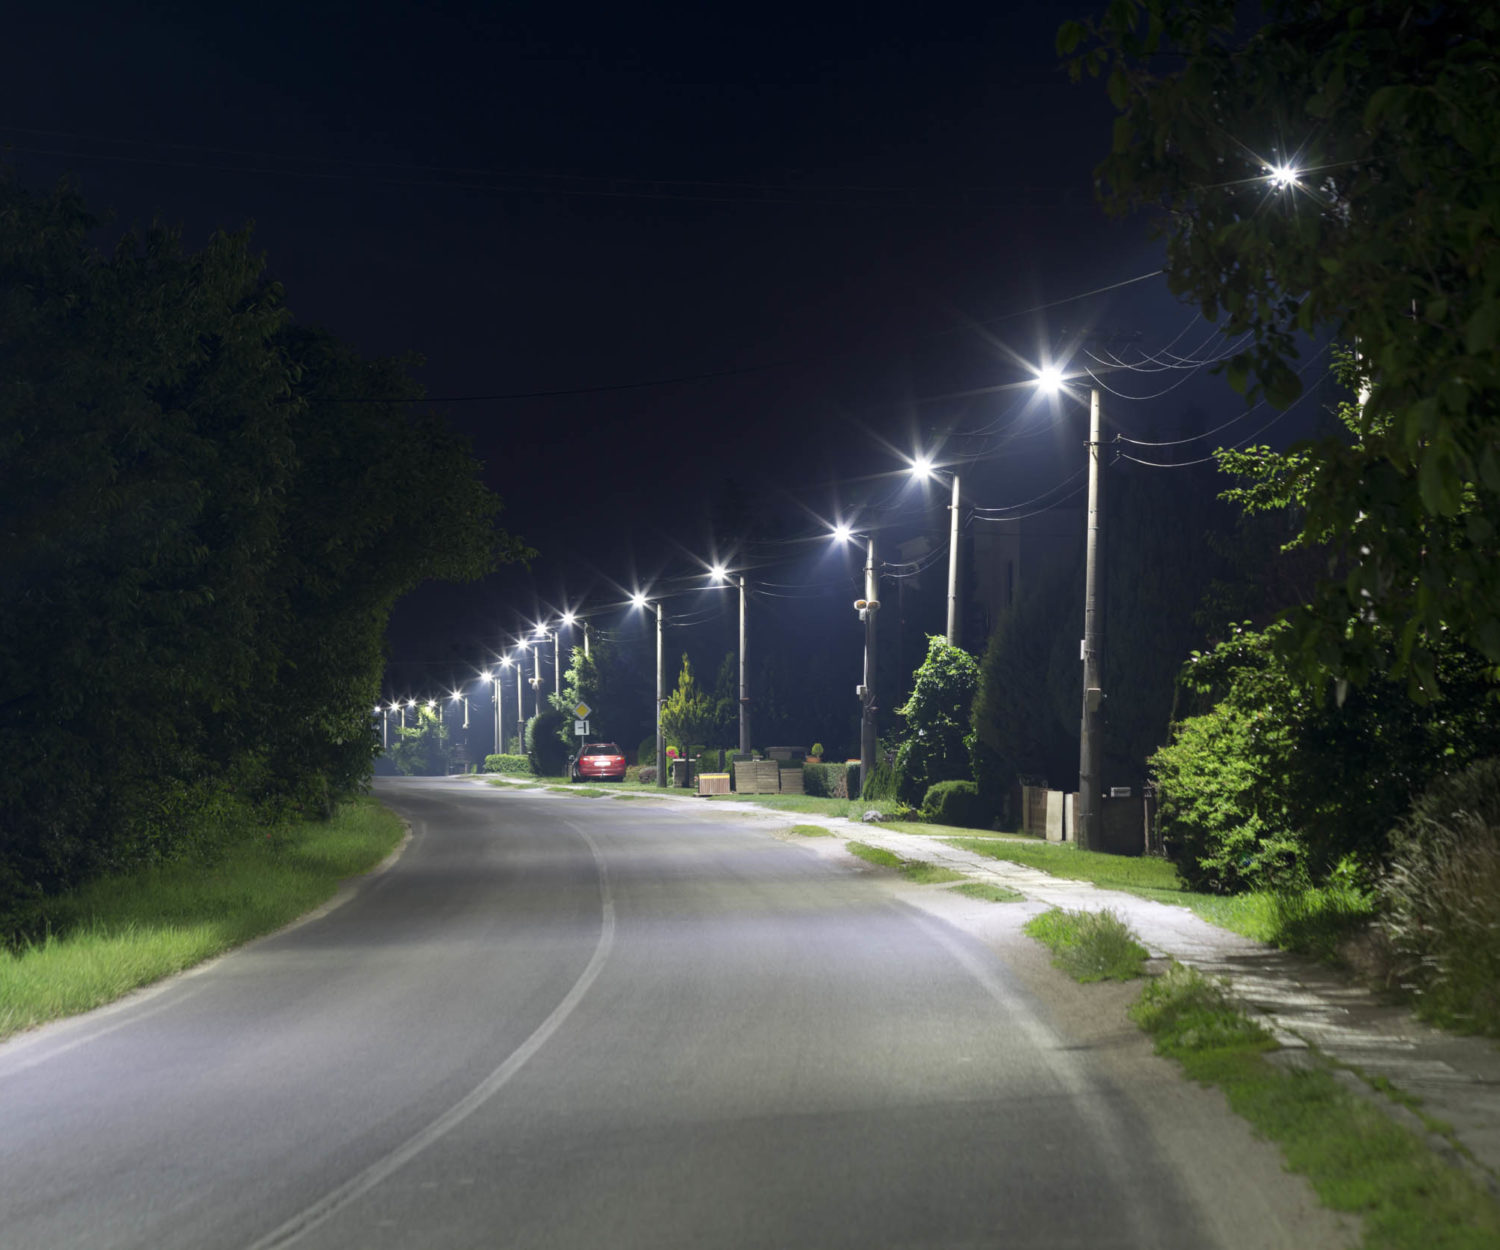 LED streetlight lighting quiet street at night